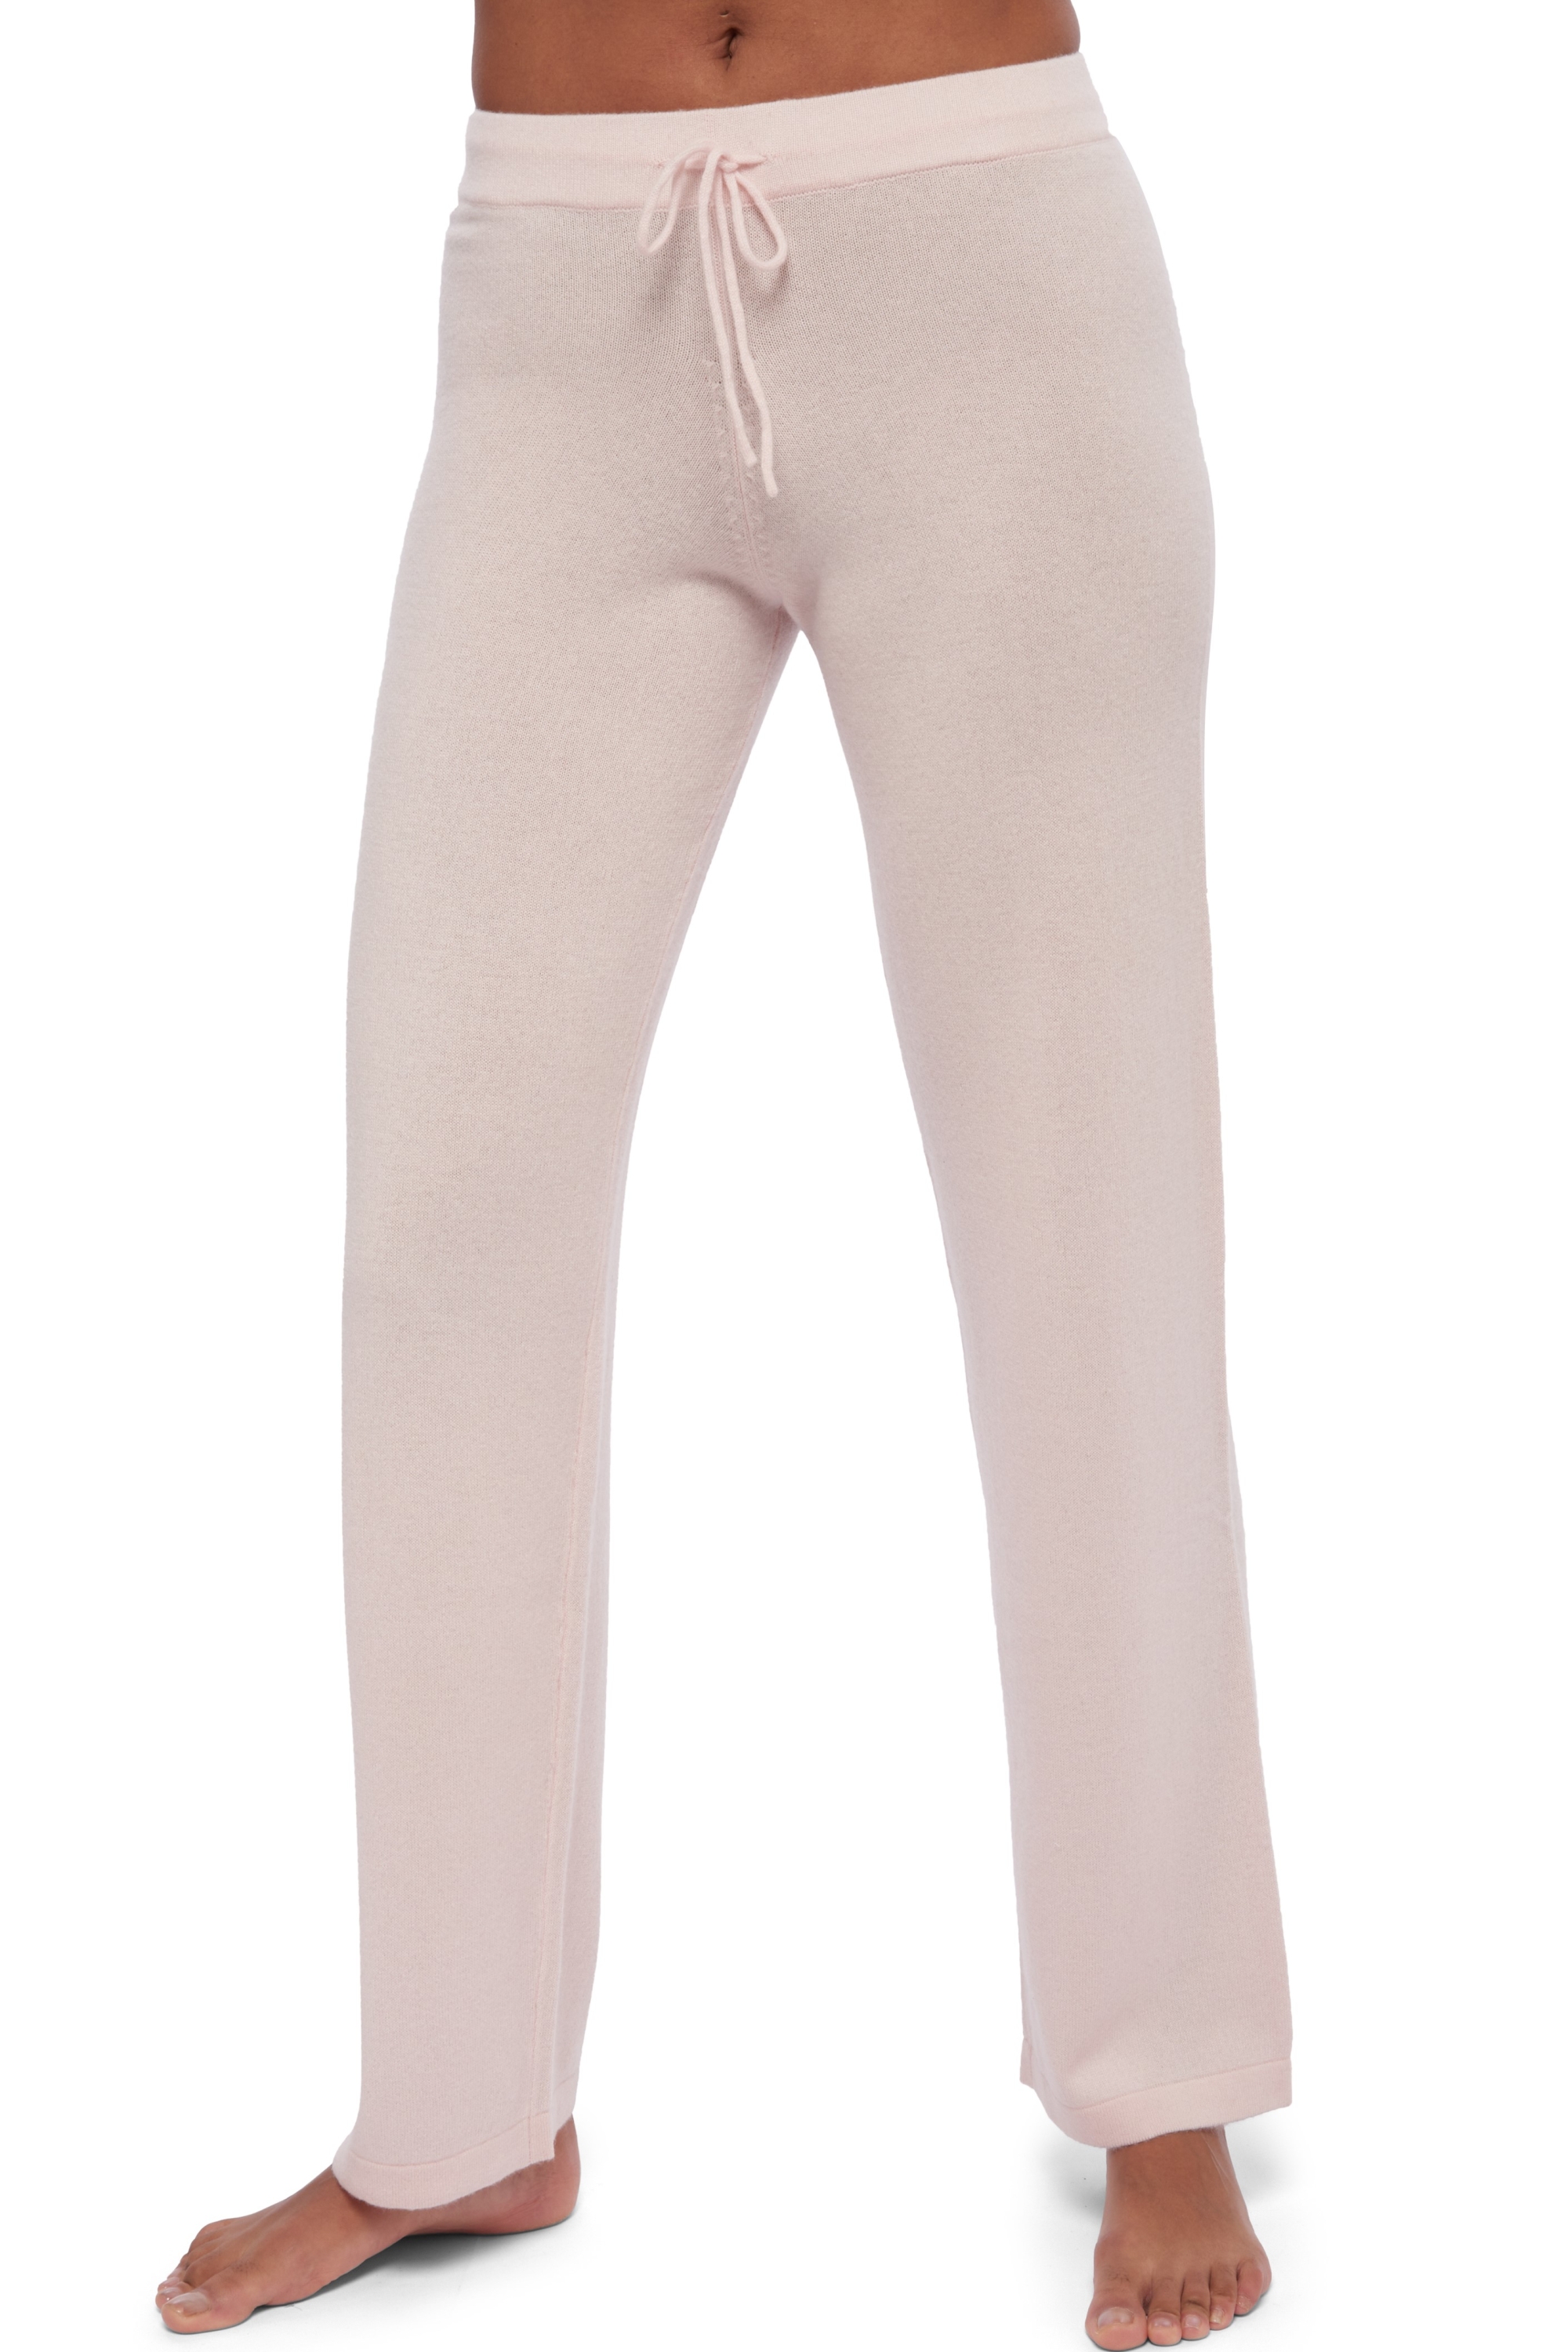 Cashmere cashmere donna pantaloni leggings malice rosa pallido s